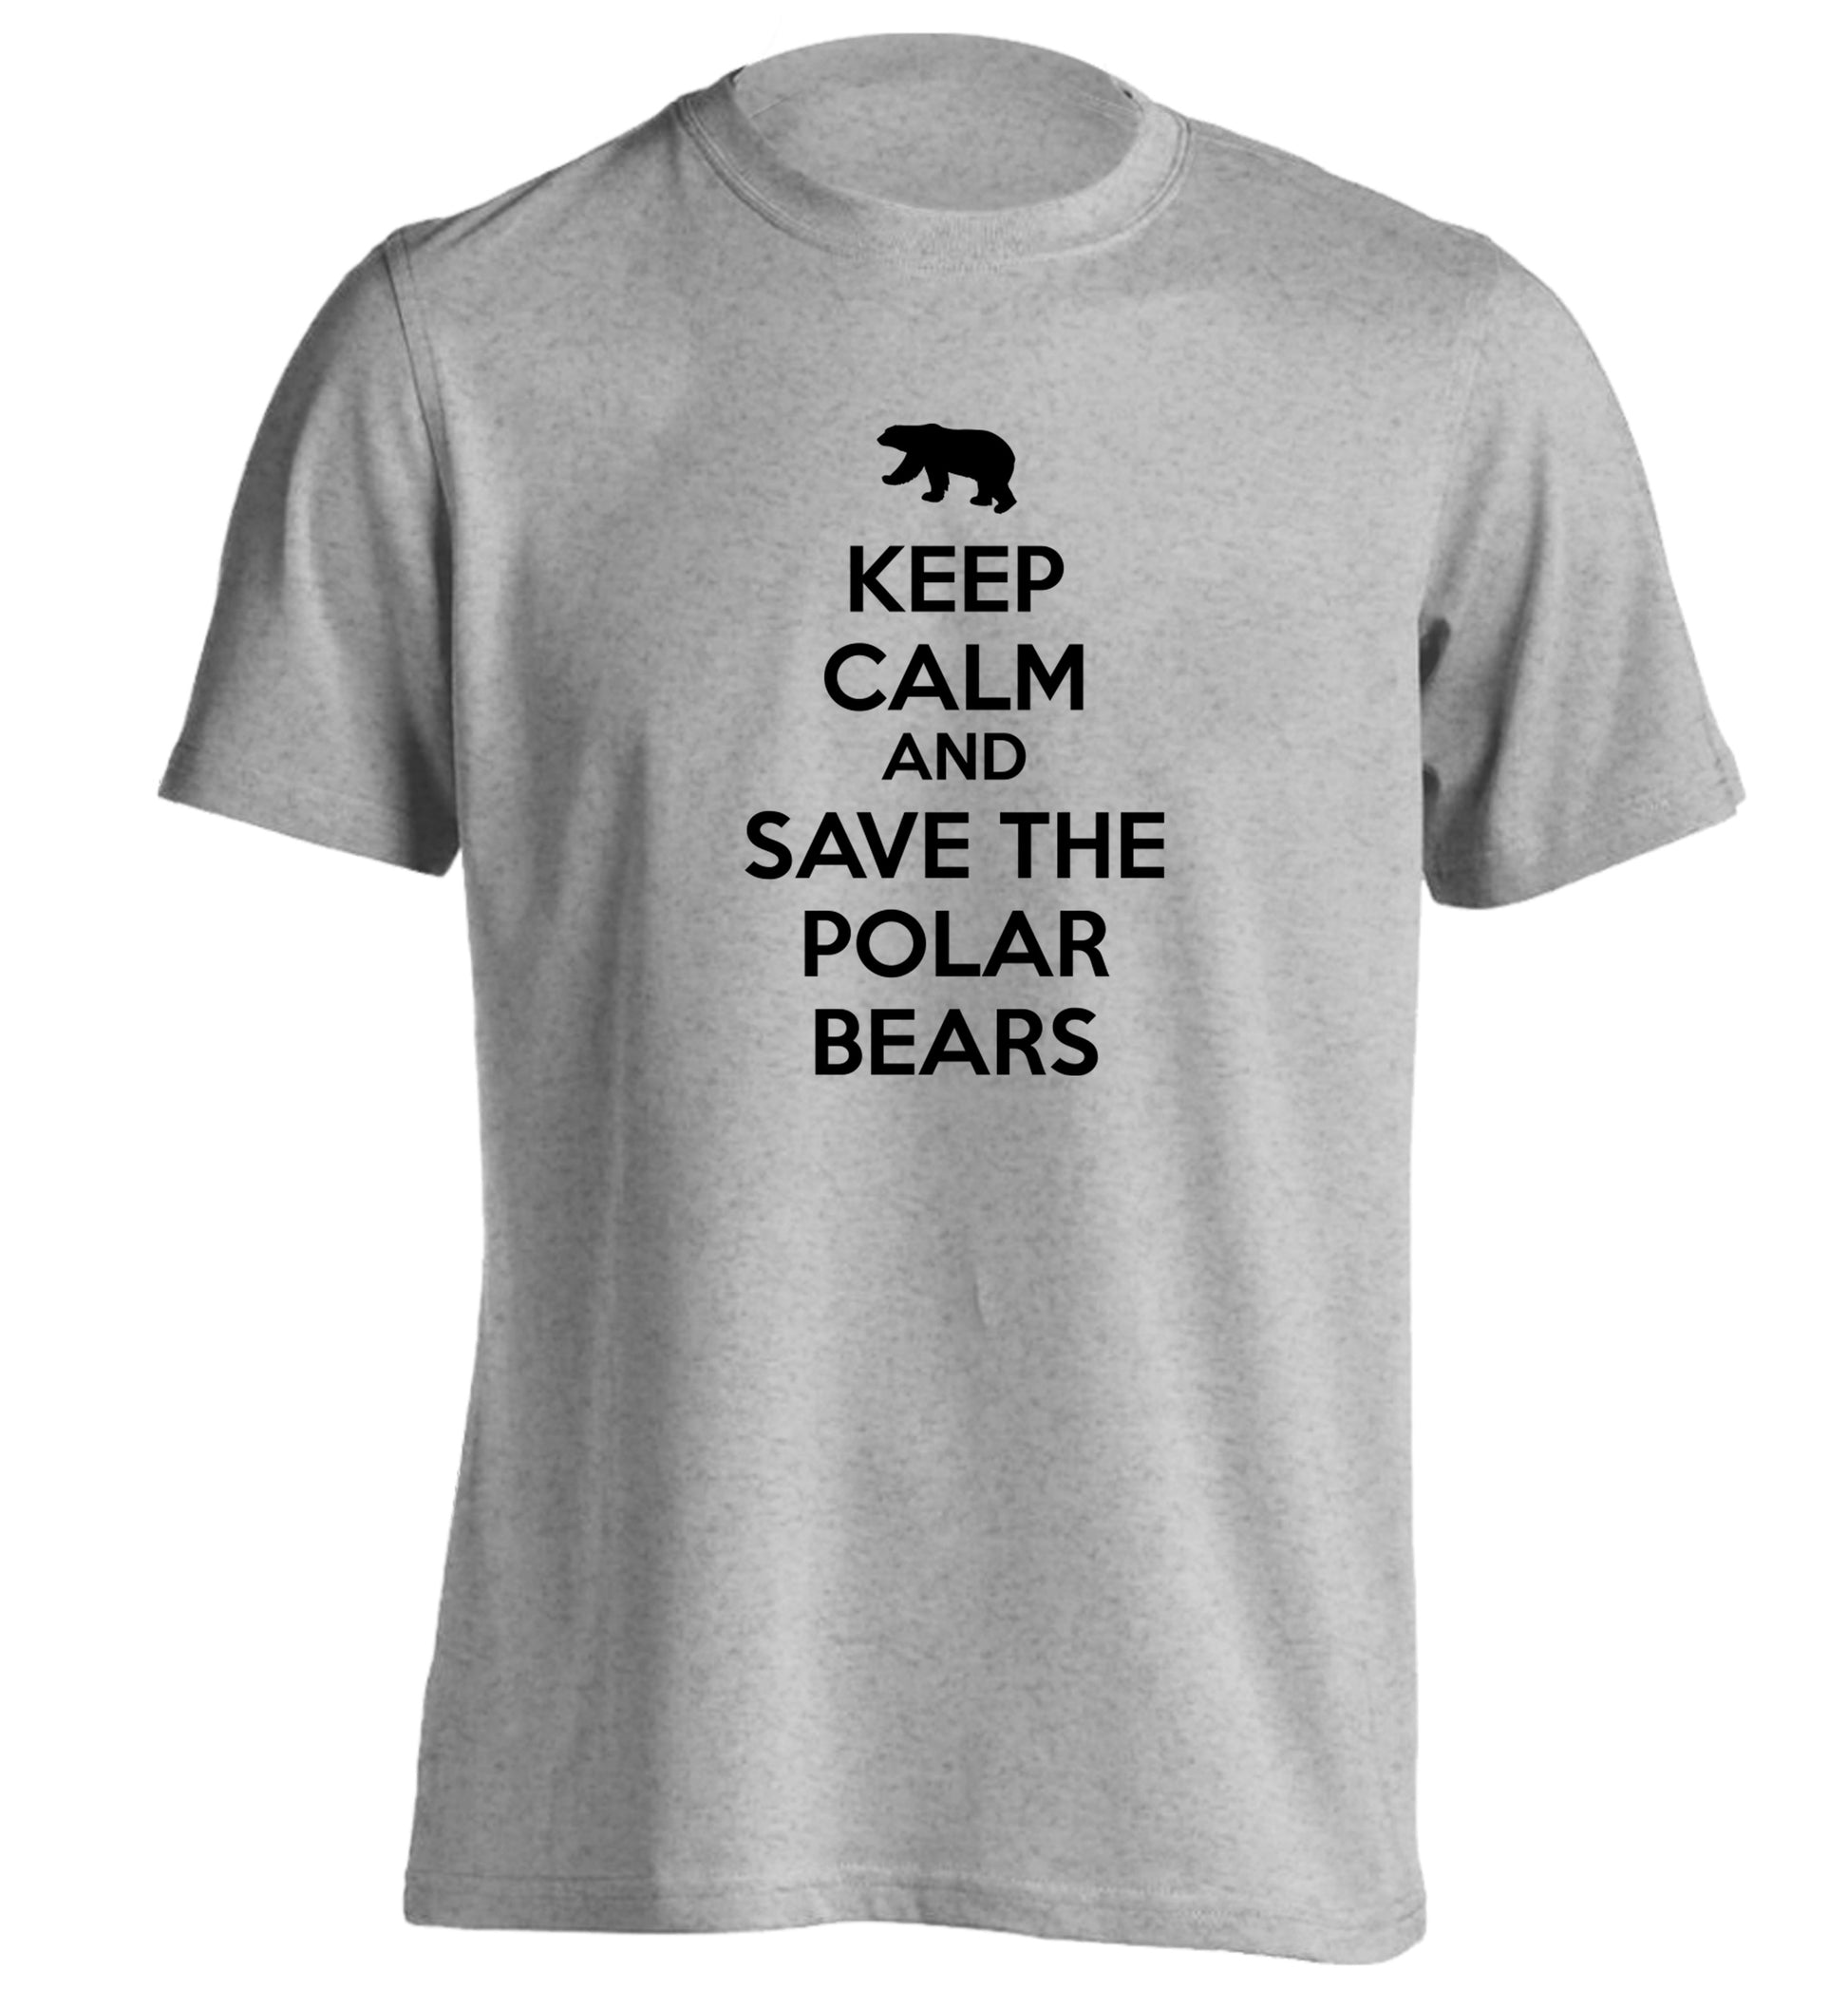 Keep calm and save the polar bears adults unisex grey Tshirt 2XL